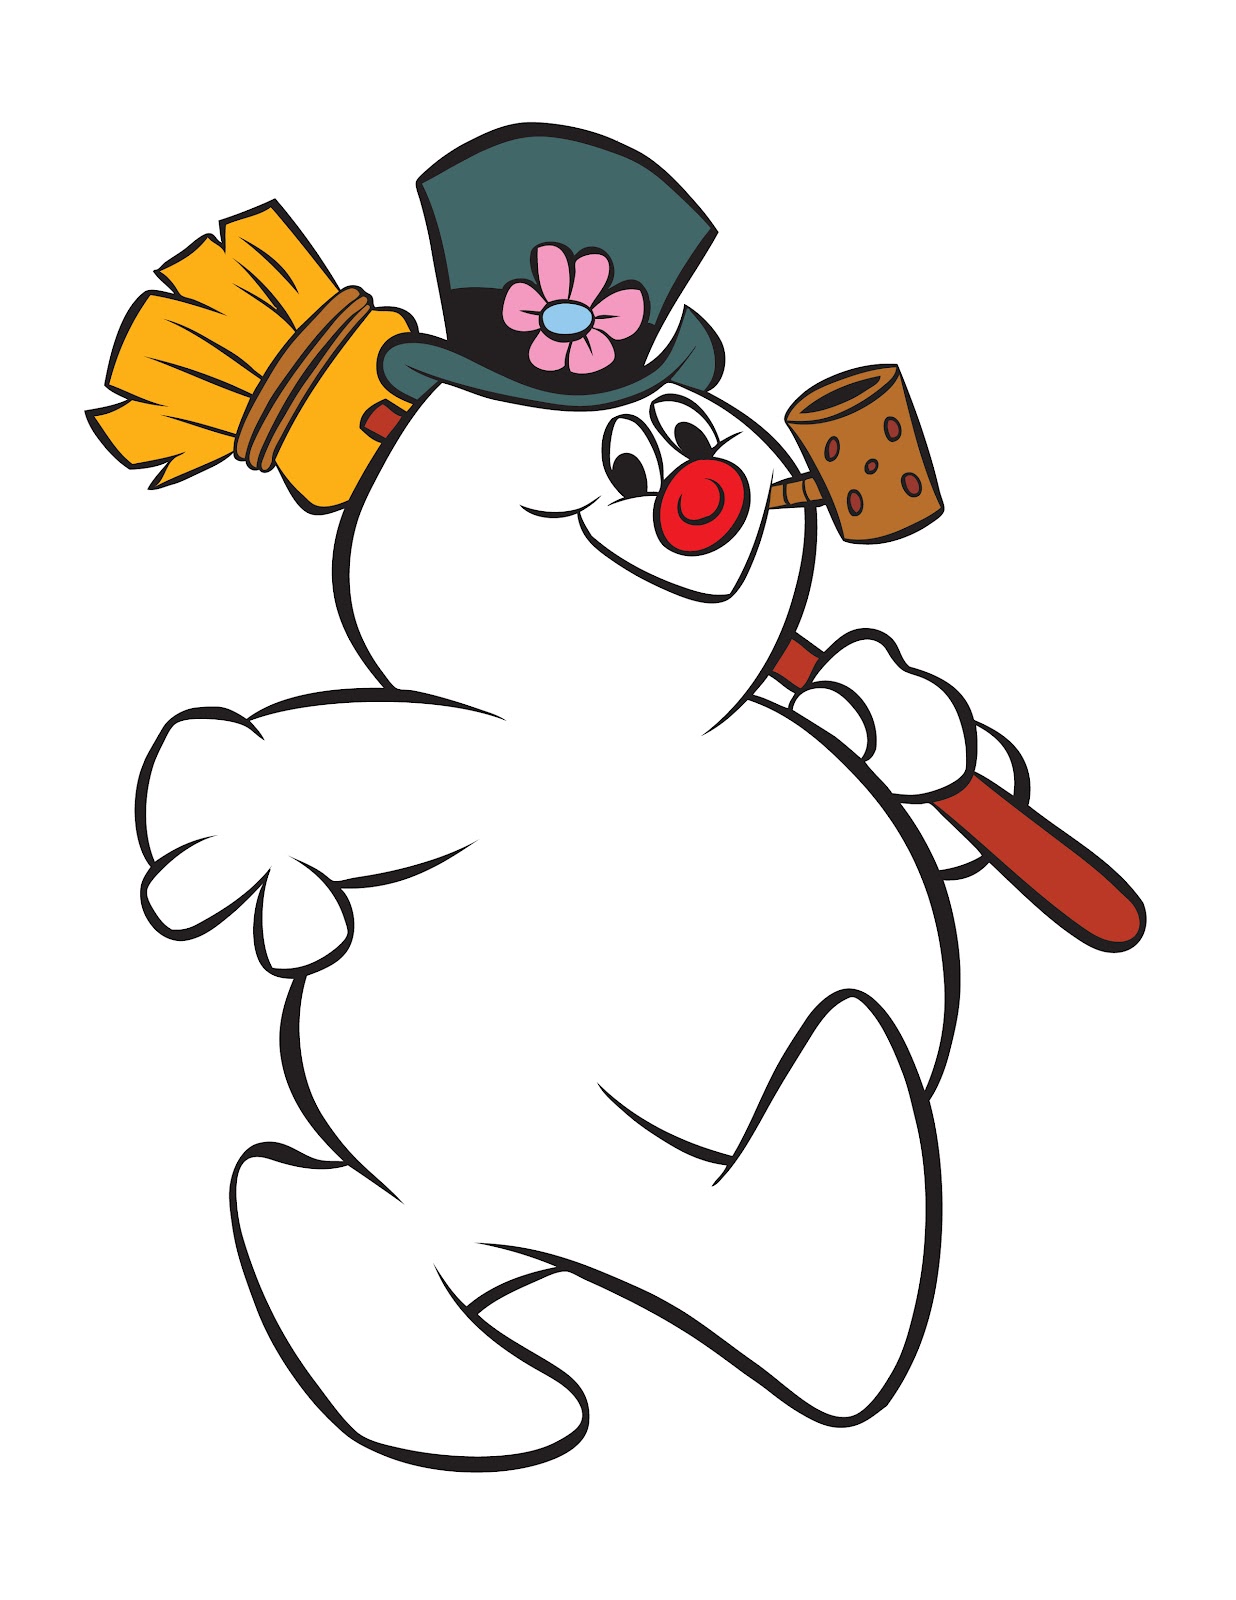 free vector clipart snowman - photo #24